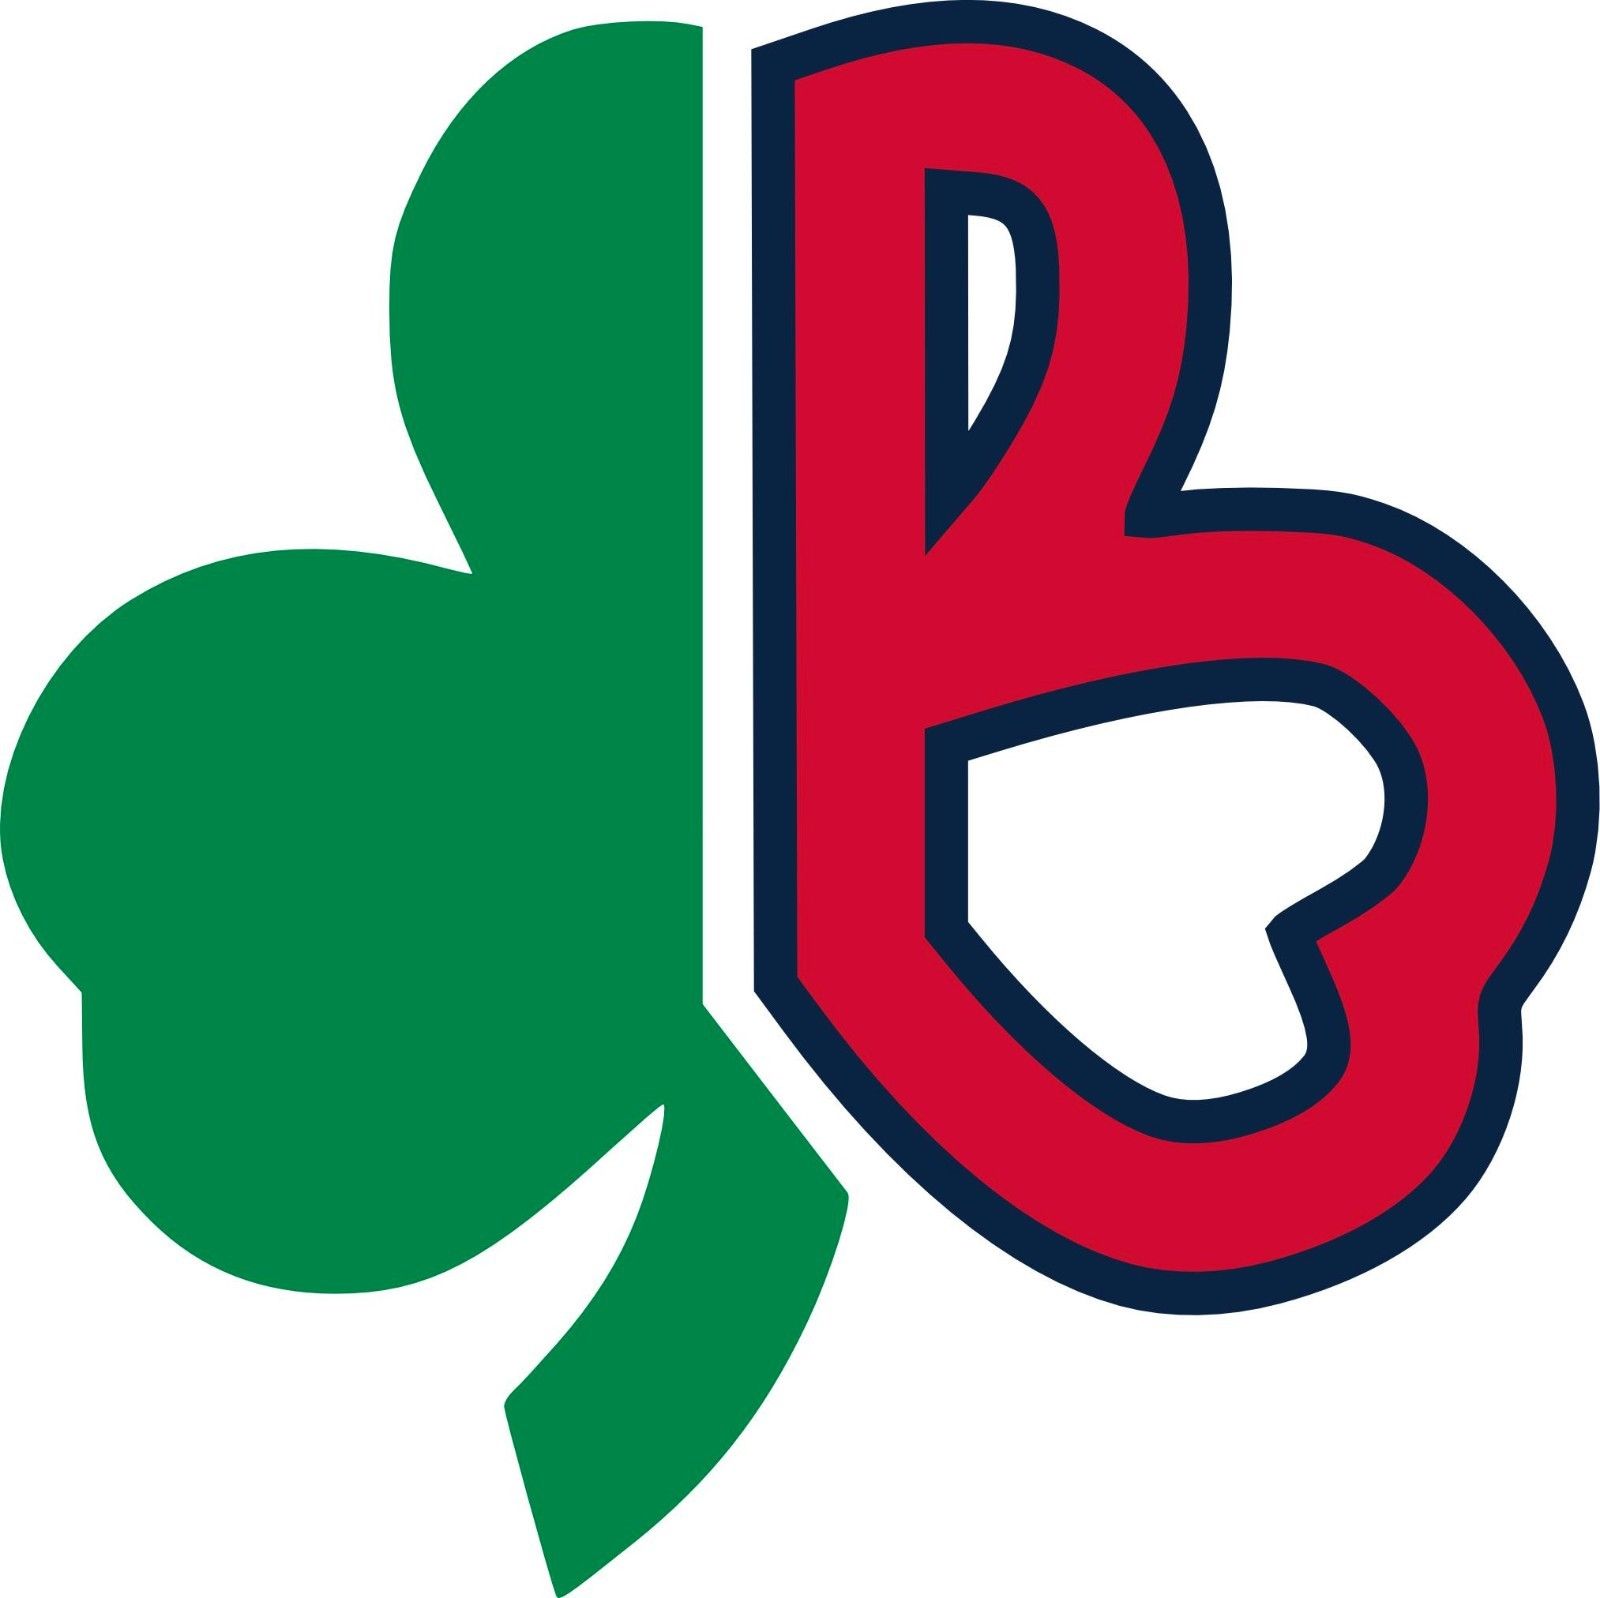 Boston Celtics / Red Sox clover "B" logo & Boston Pro Teams Mashup ...